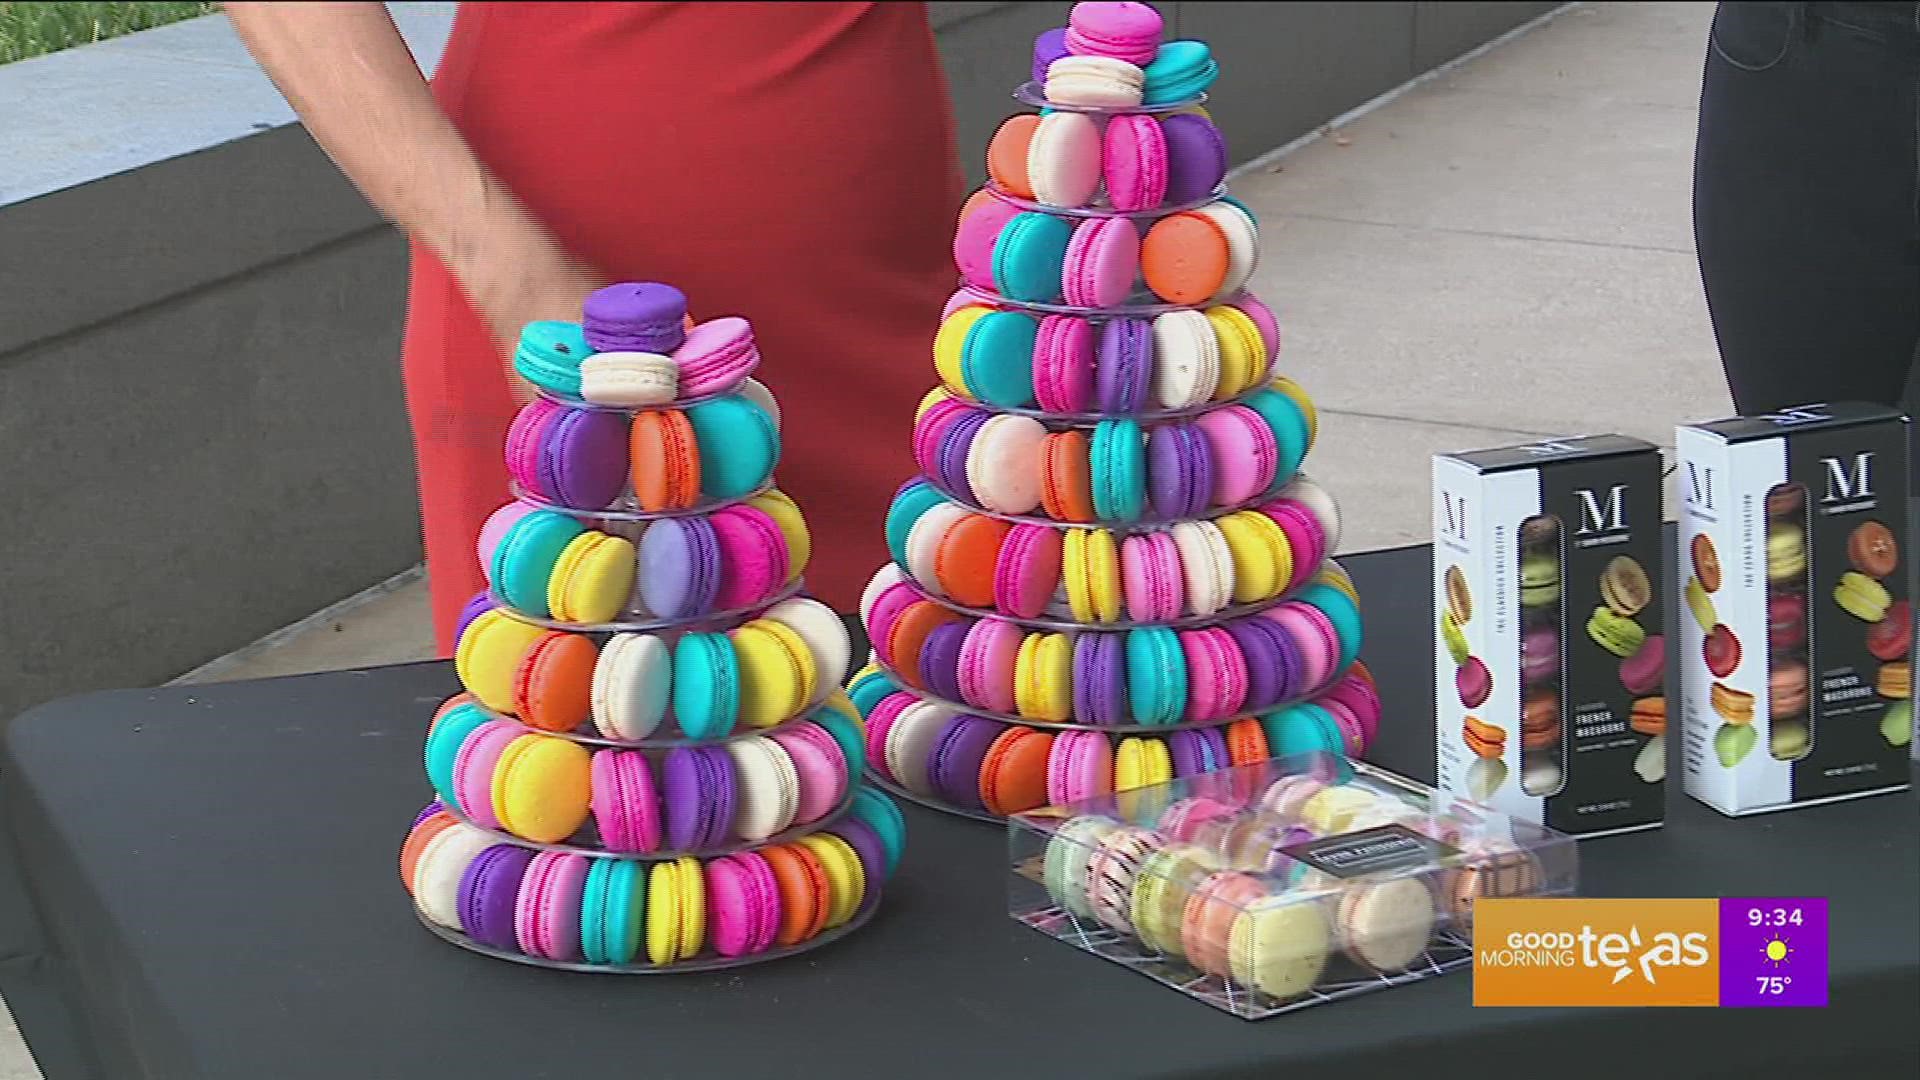 Savor Patisserie Owner Kelli Watts shares her Macarons